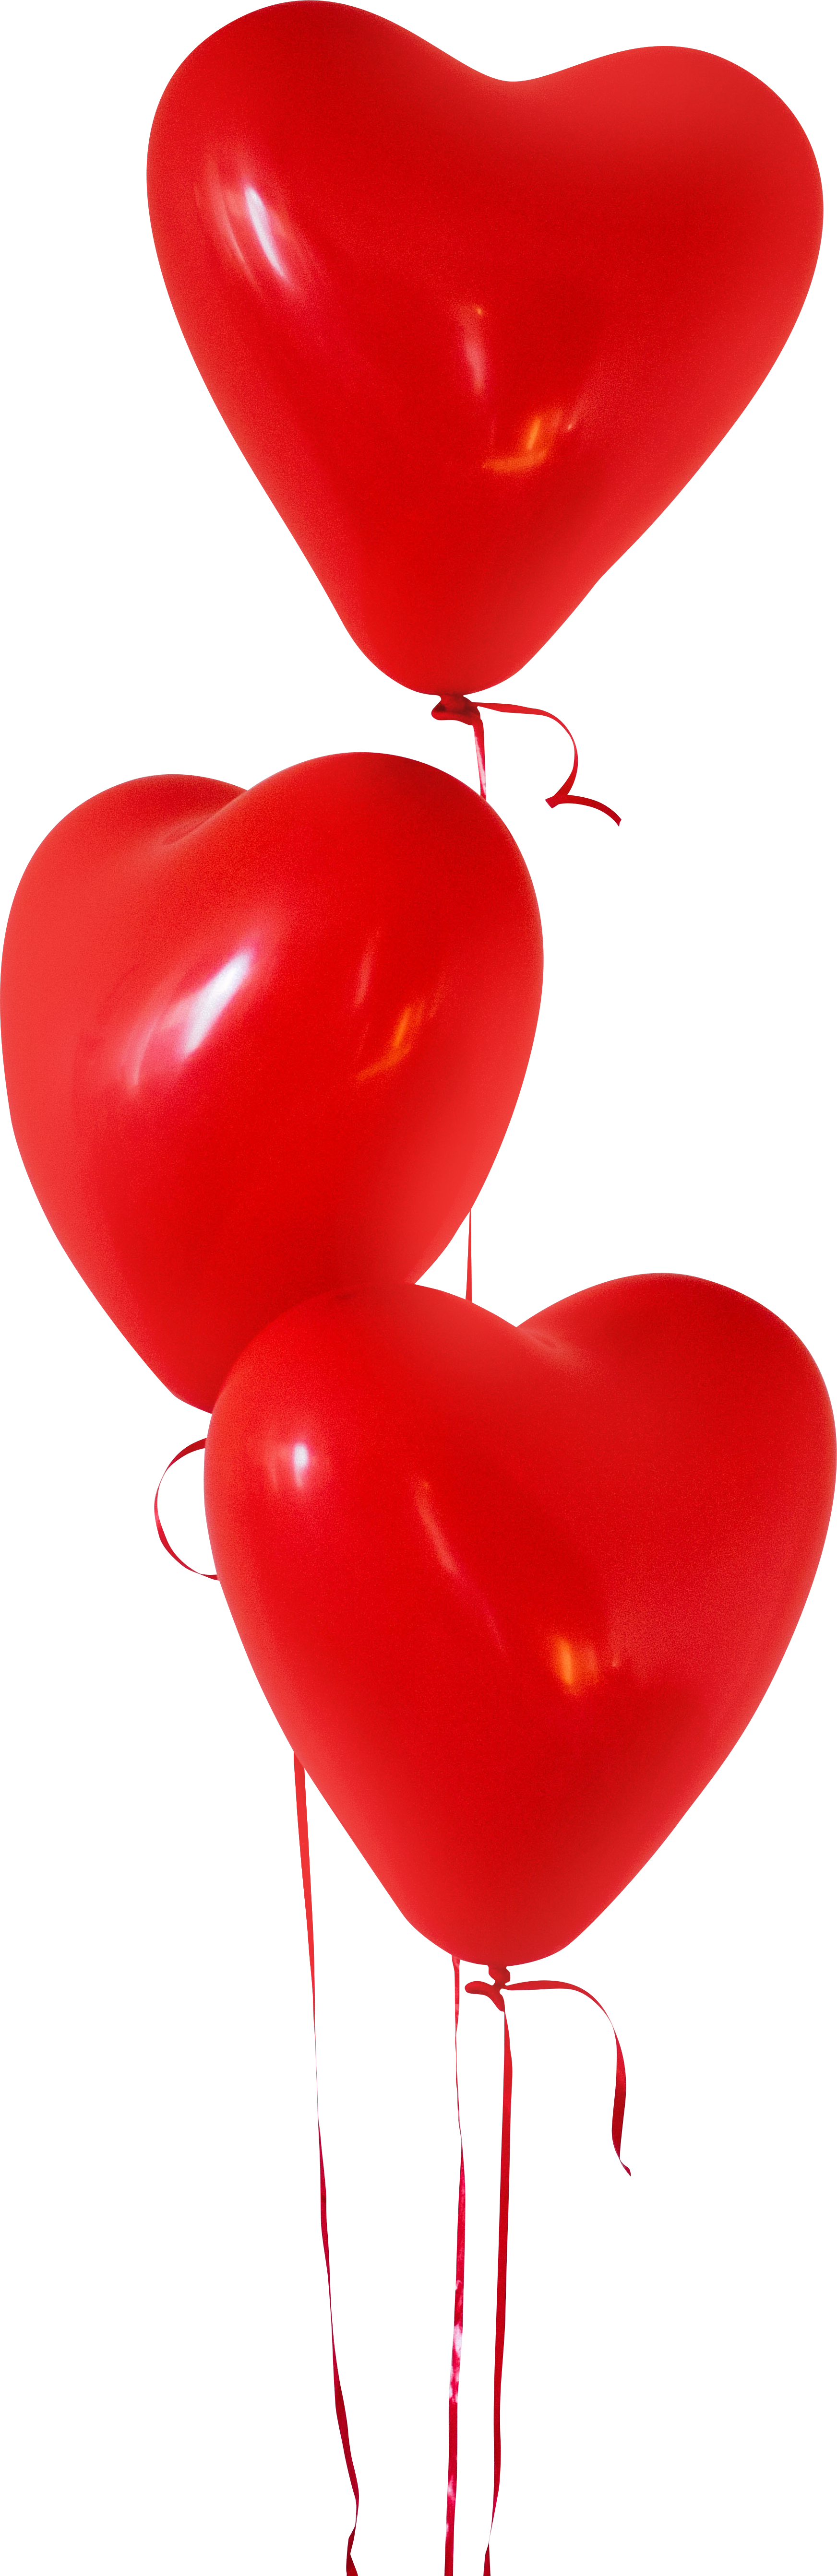 Herz rote Ballons freies PNG-Bild